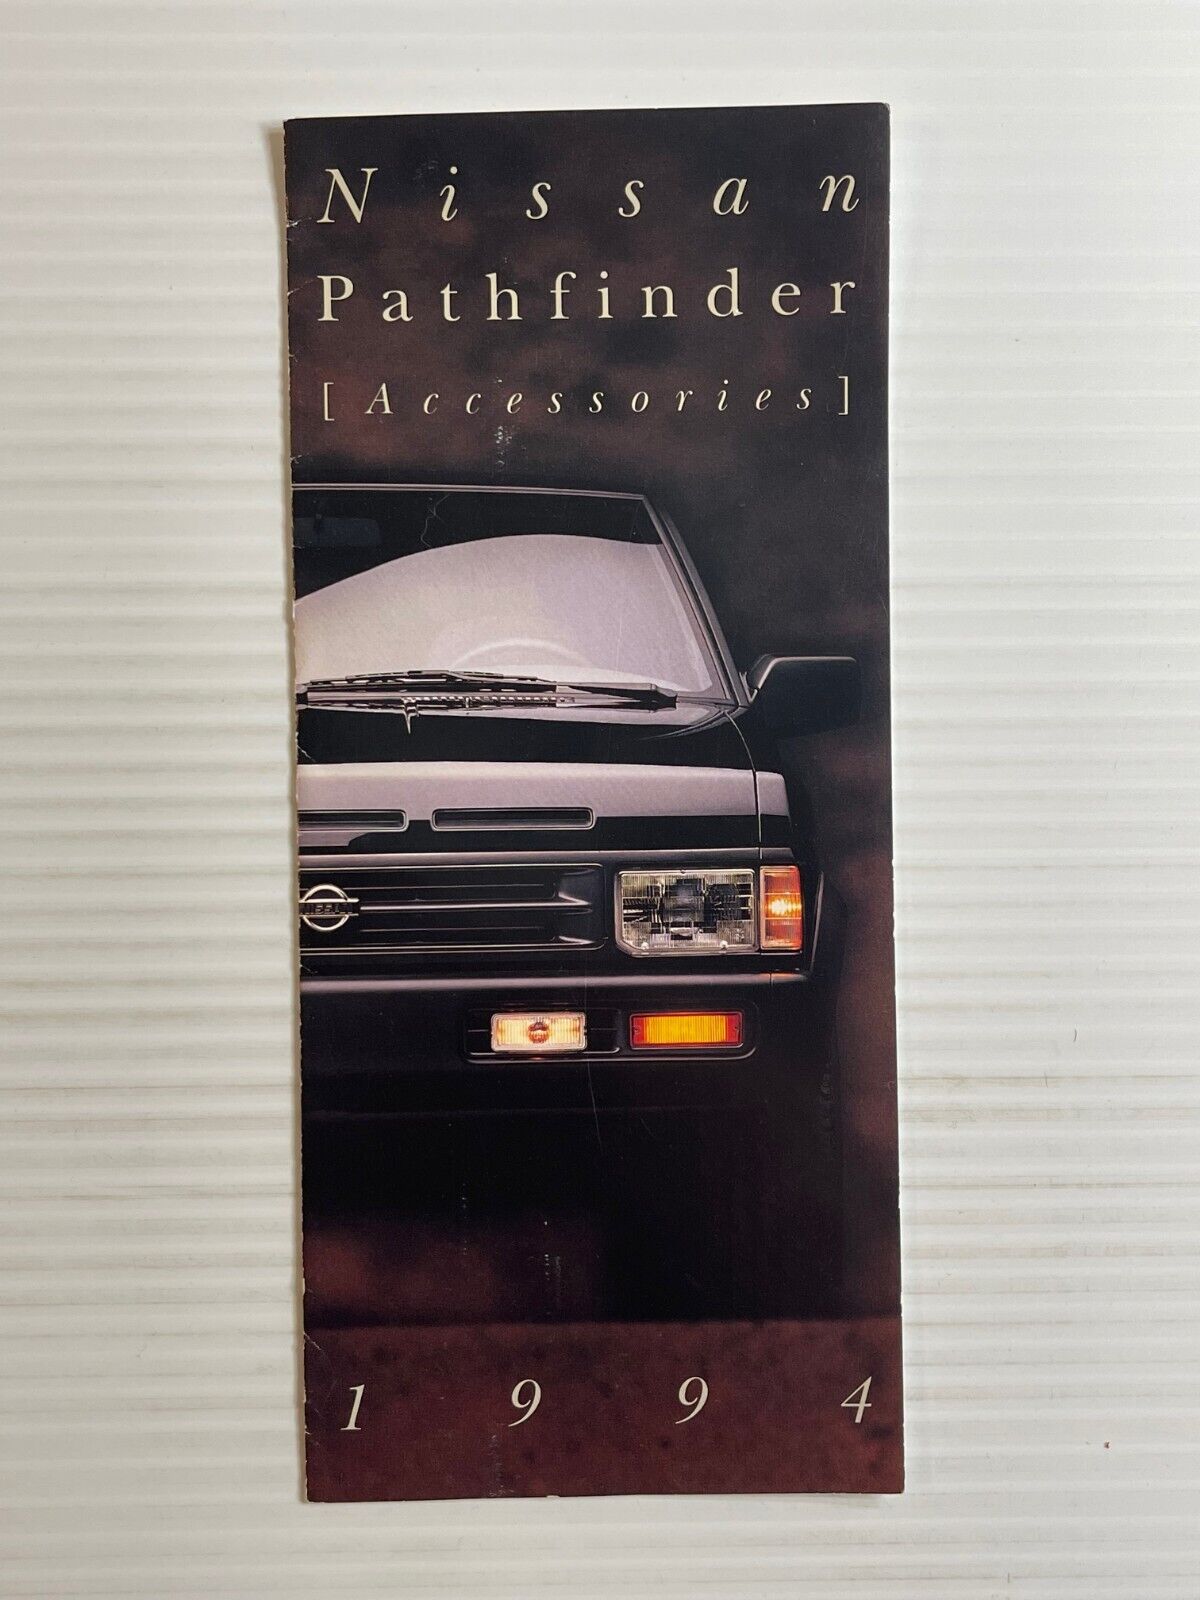 Original 1994 Nissan Pathfinder SUV -  Accessories Sales Brochure Fold Out